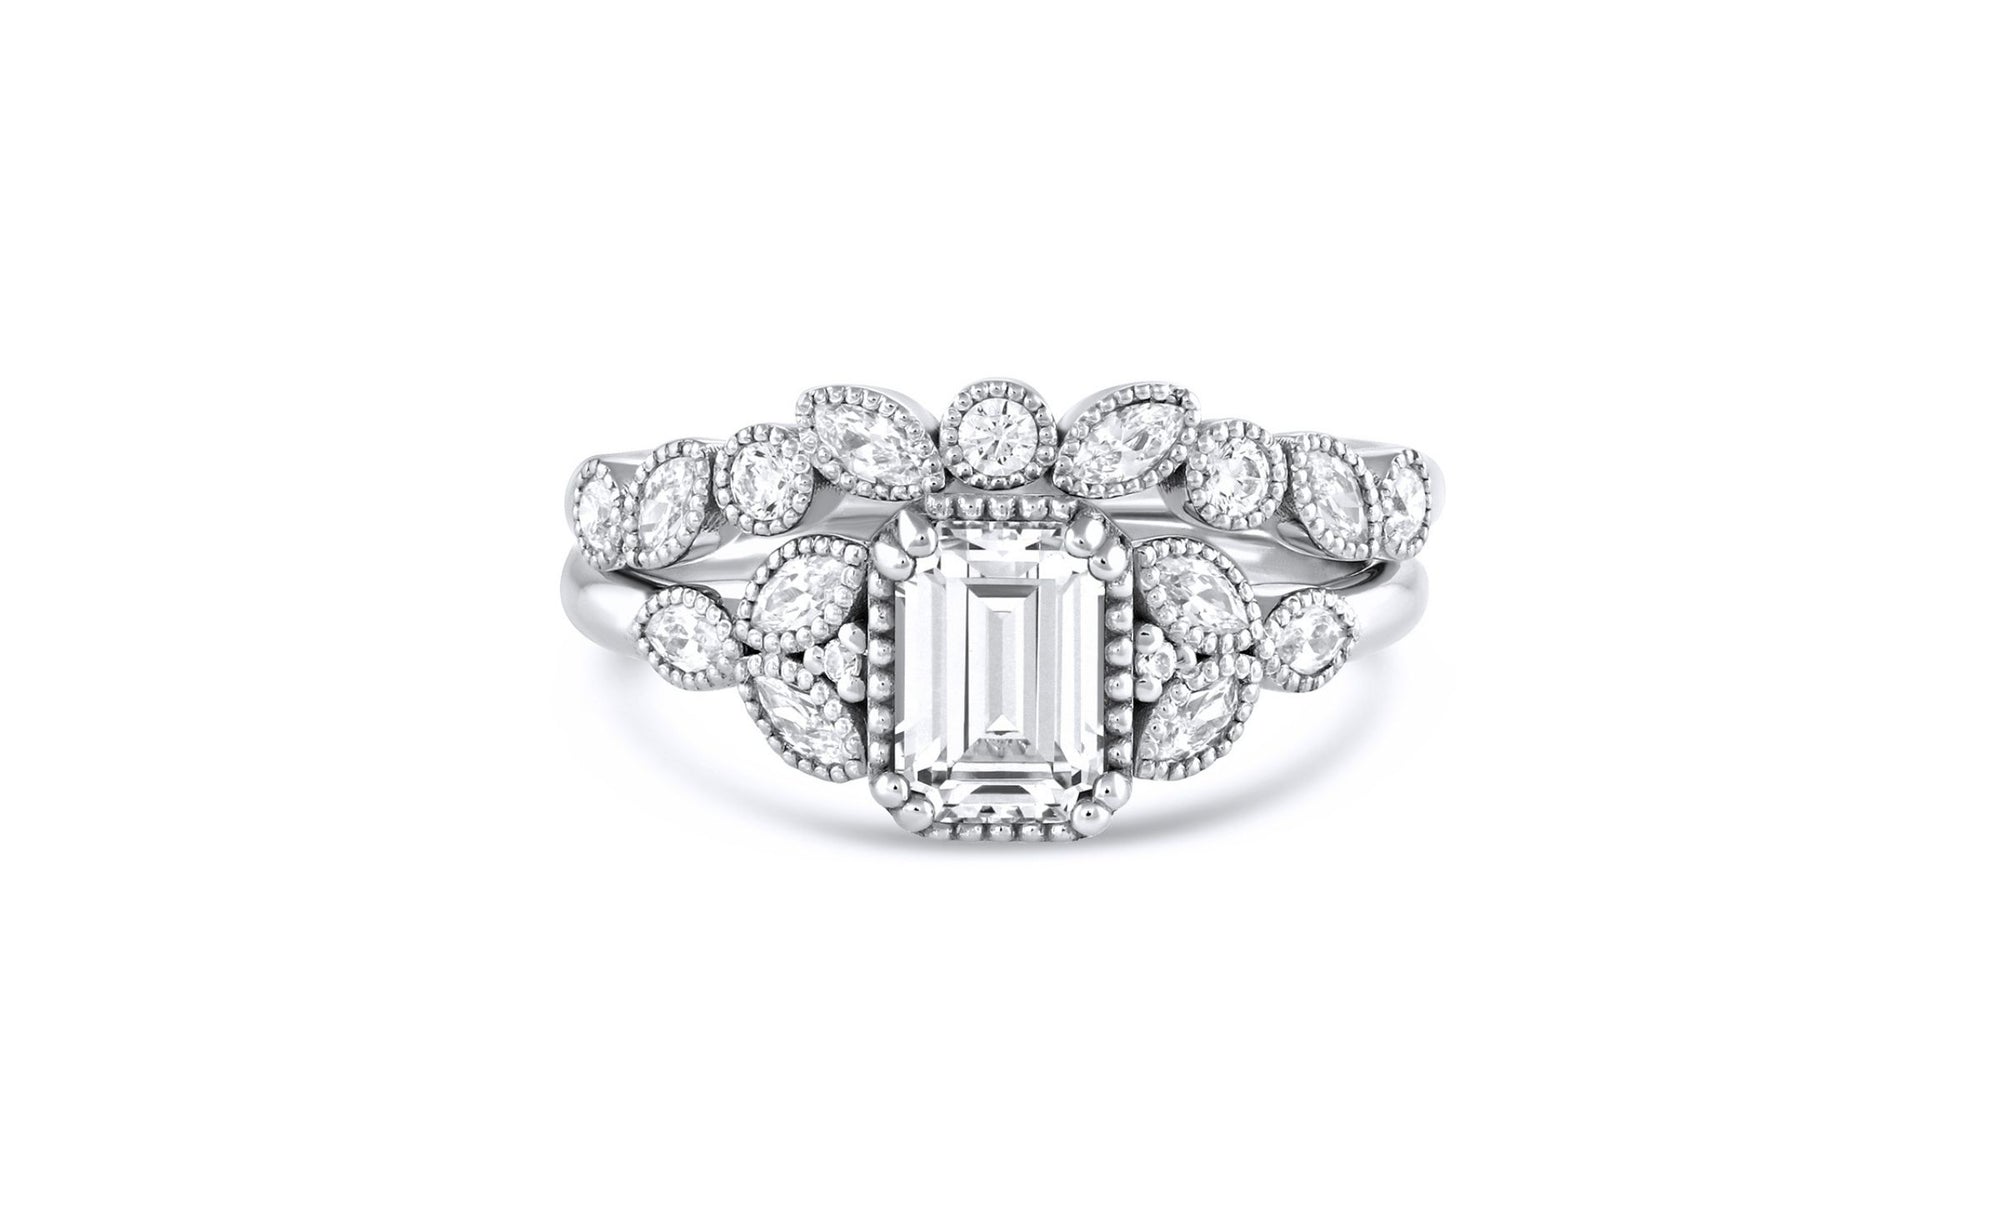 Emerald Cut Diamond & Gemstone Jewelry